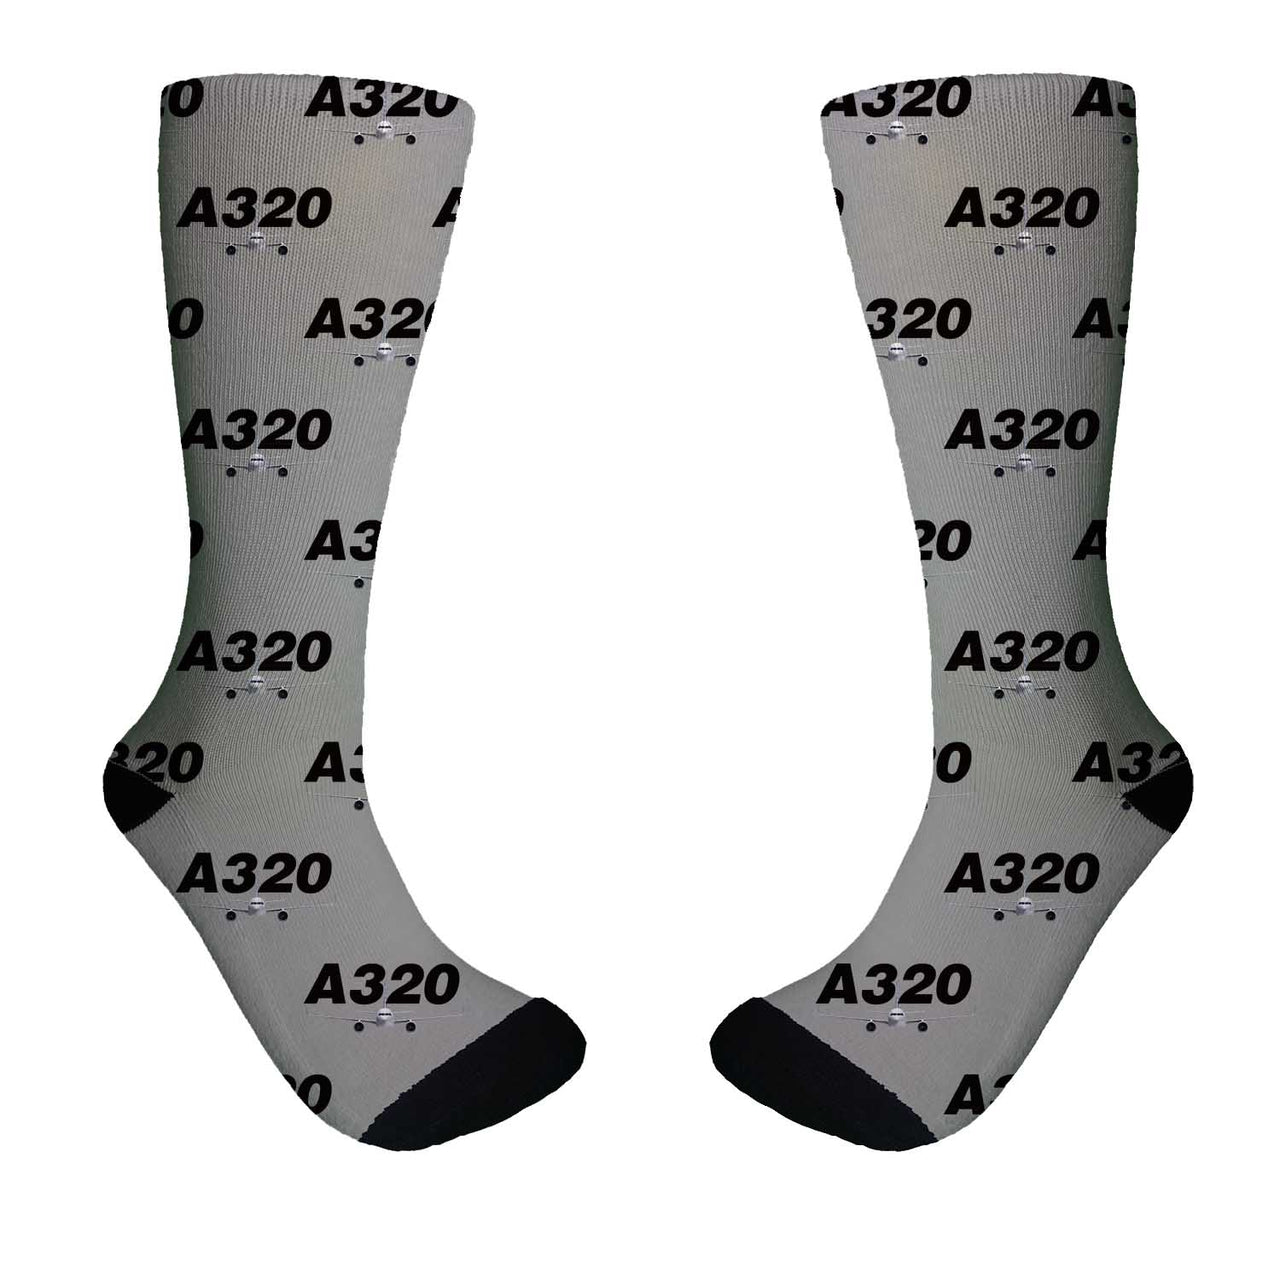 Super Airbus A320 Designed Socks